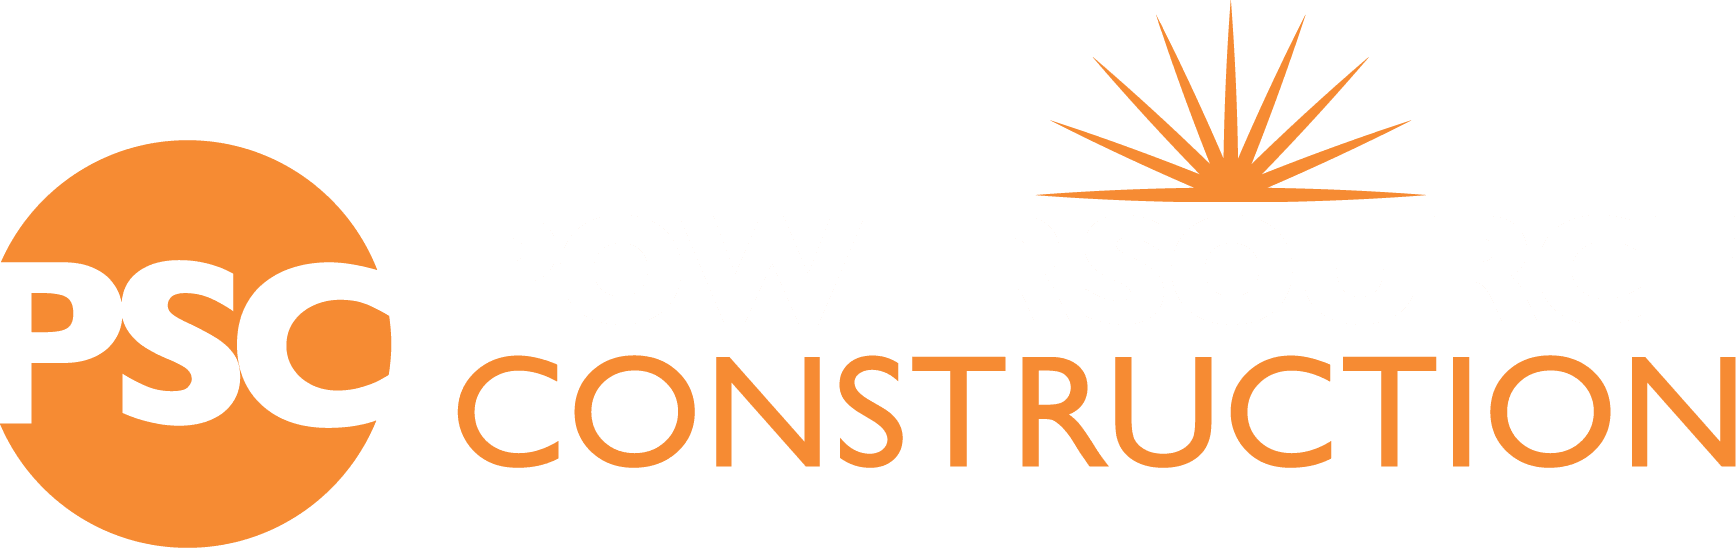 Powersource Construction